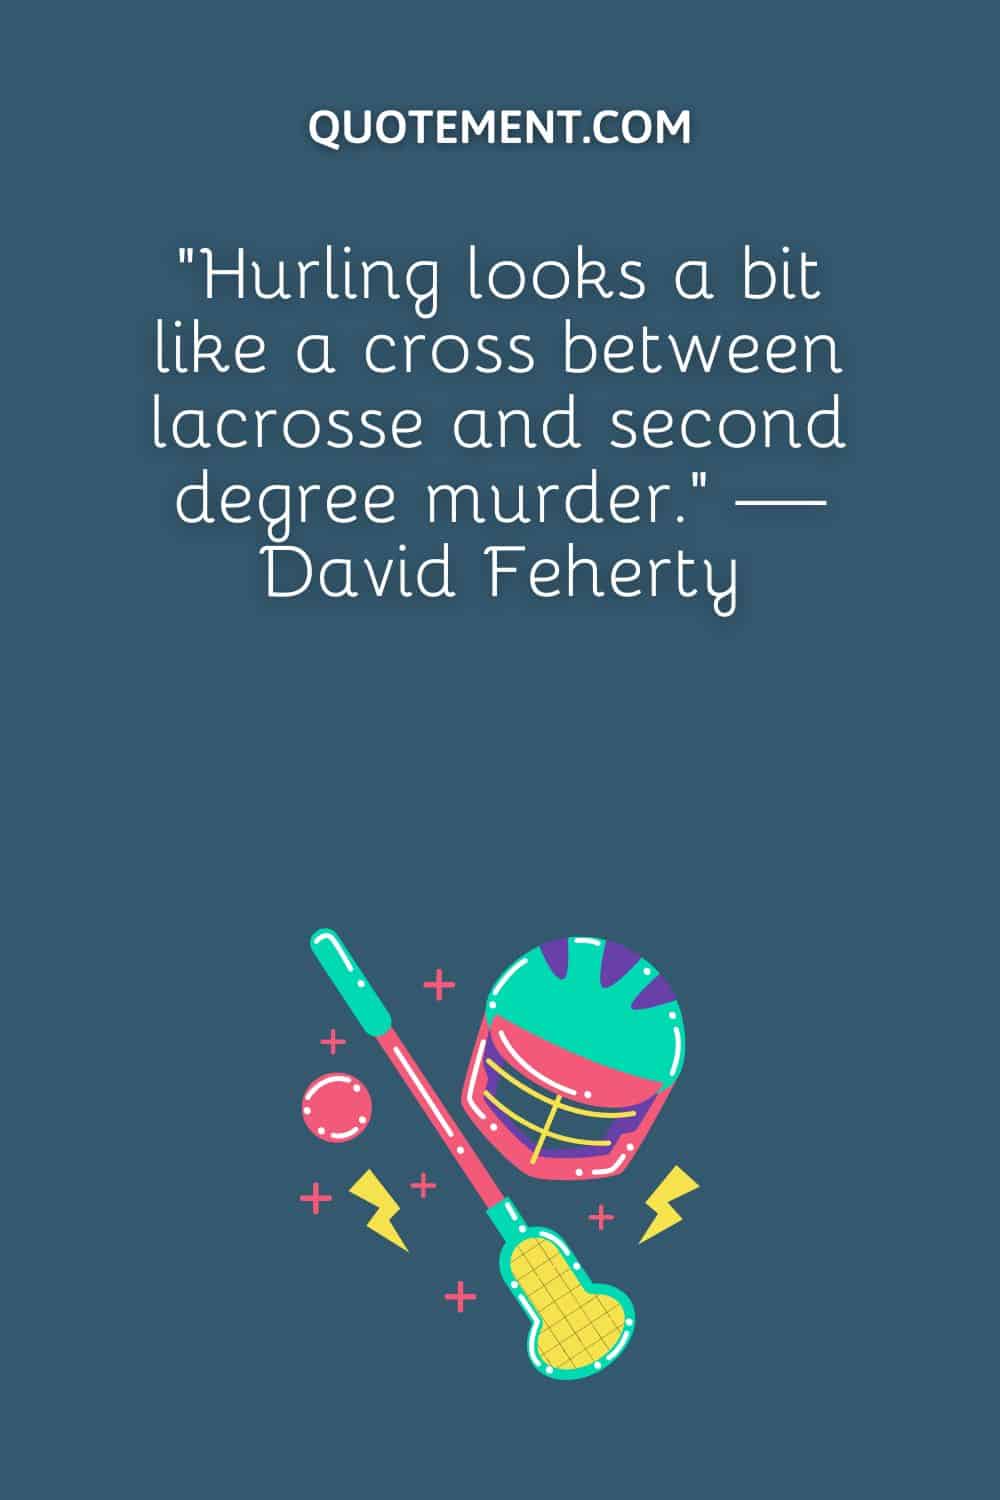 Hurling looks a bit like a cross between lacrosse and second degree murder. — David Feherty